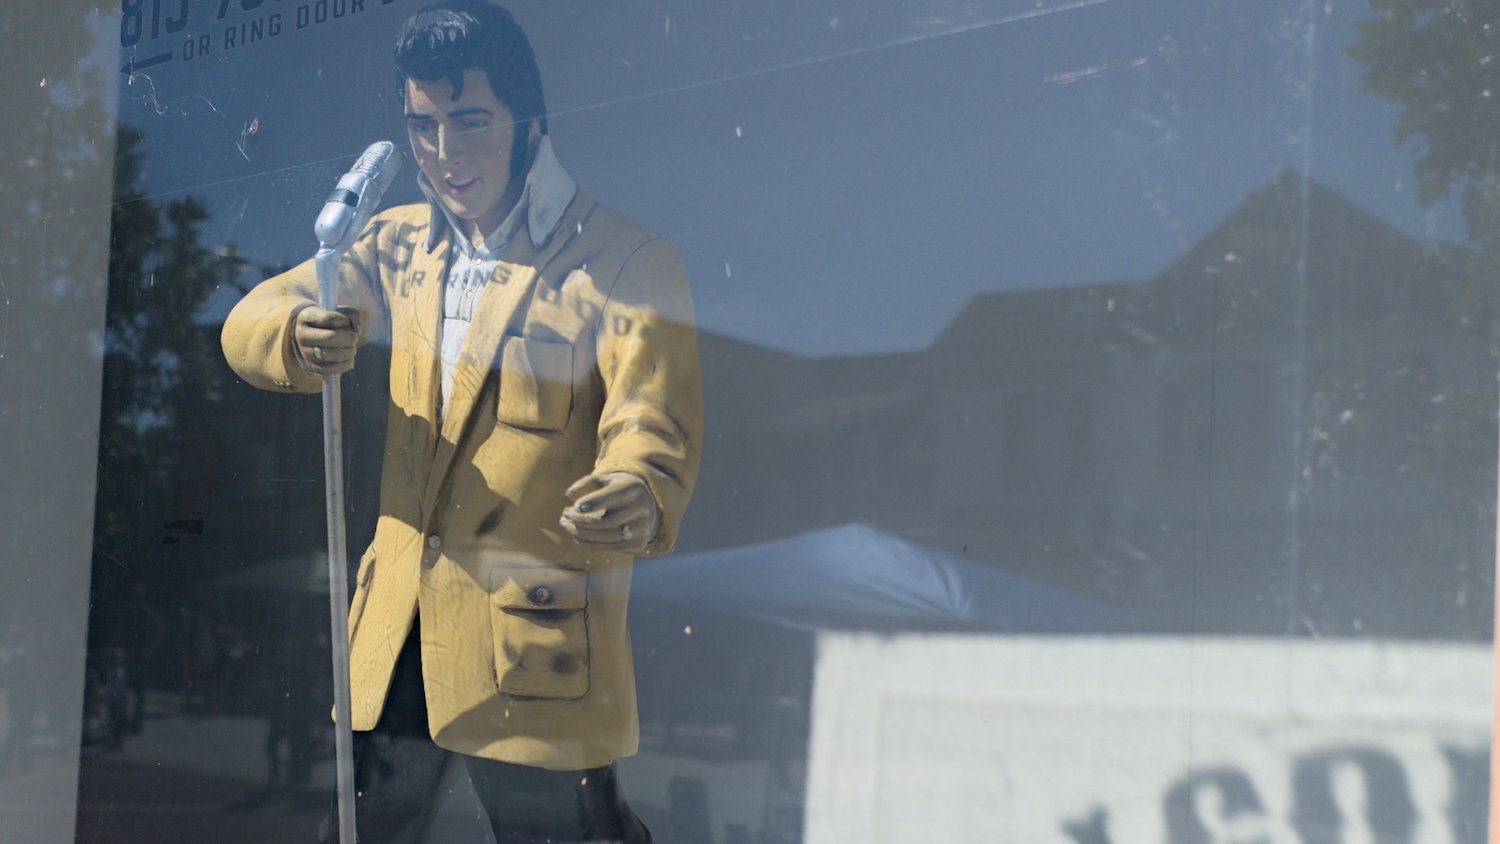 Elvis Presley figurine in a shop window.